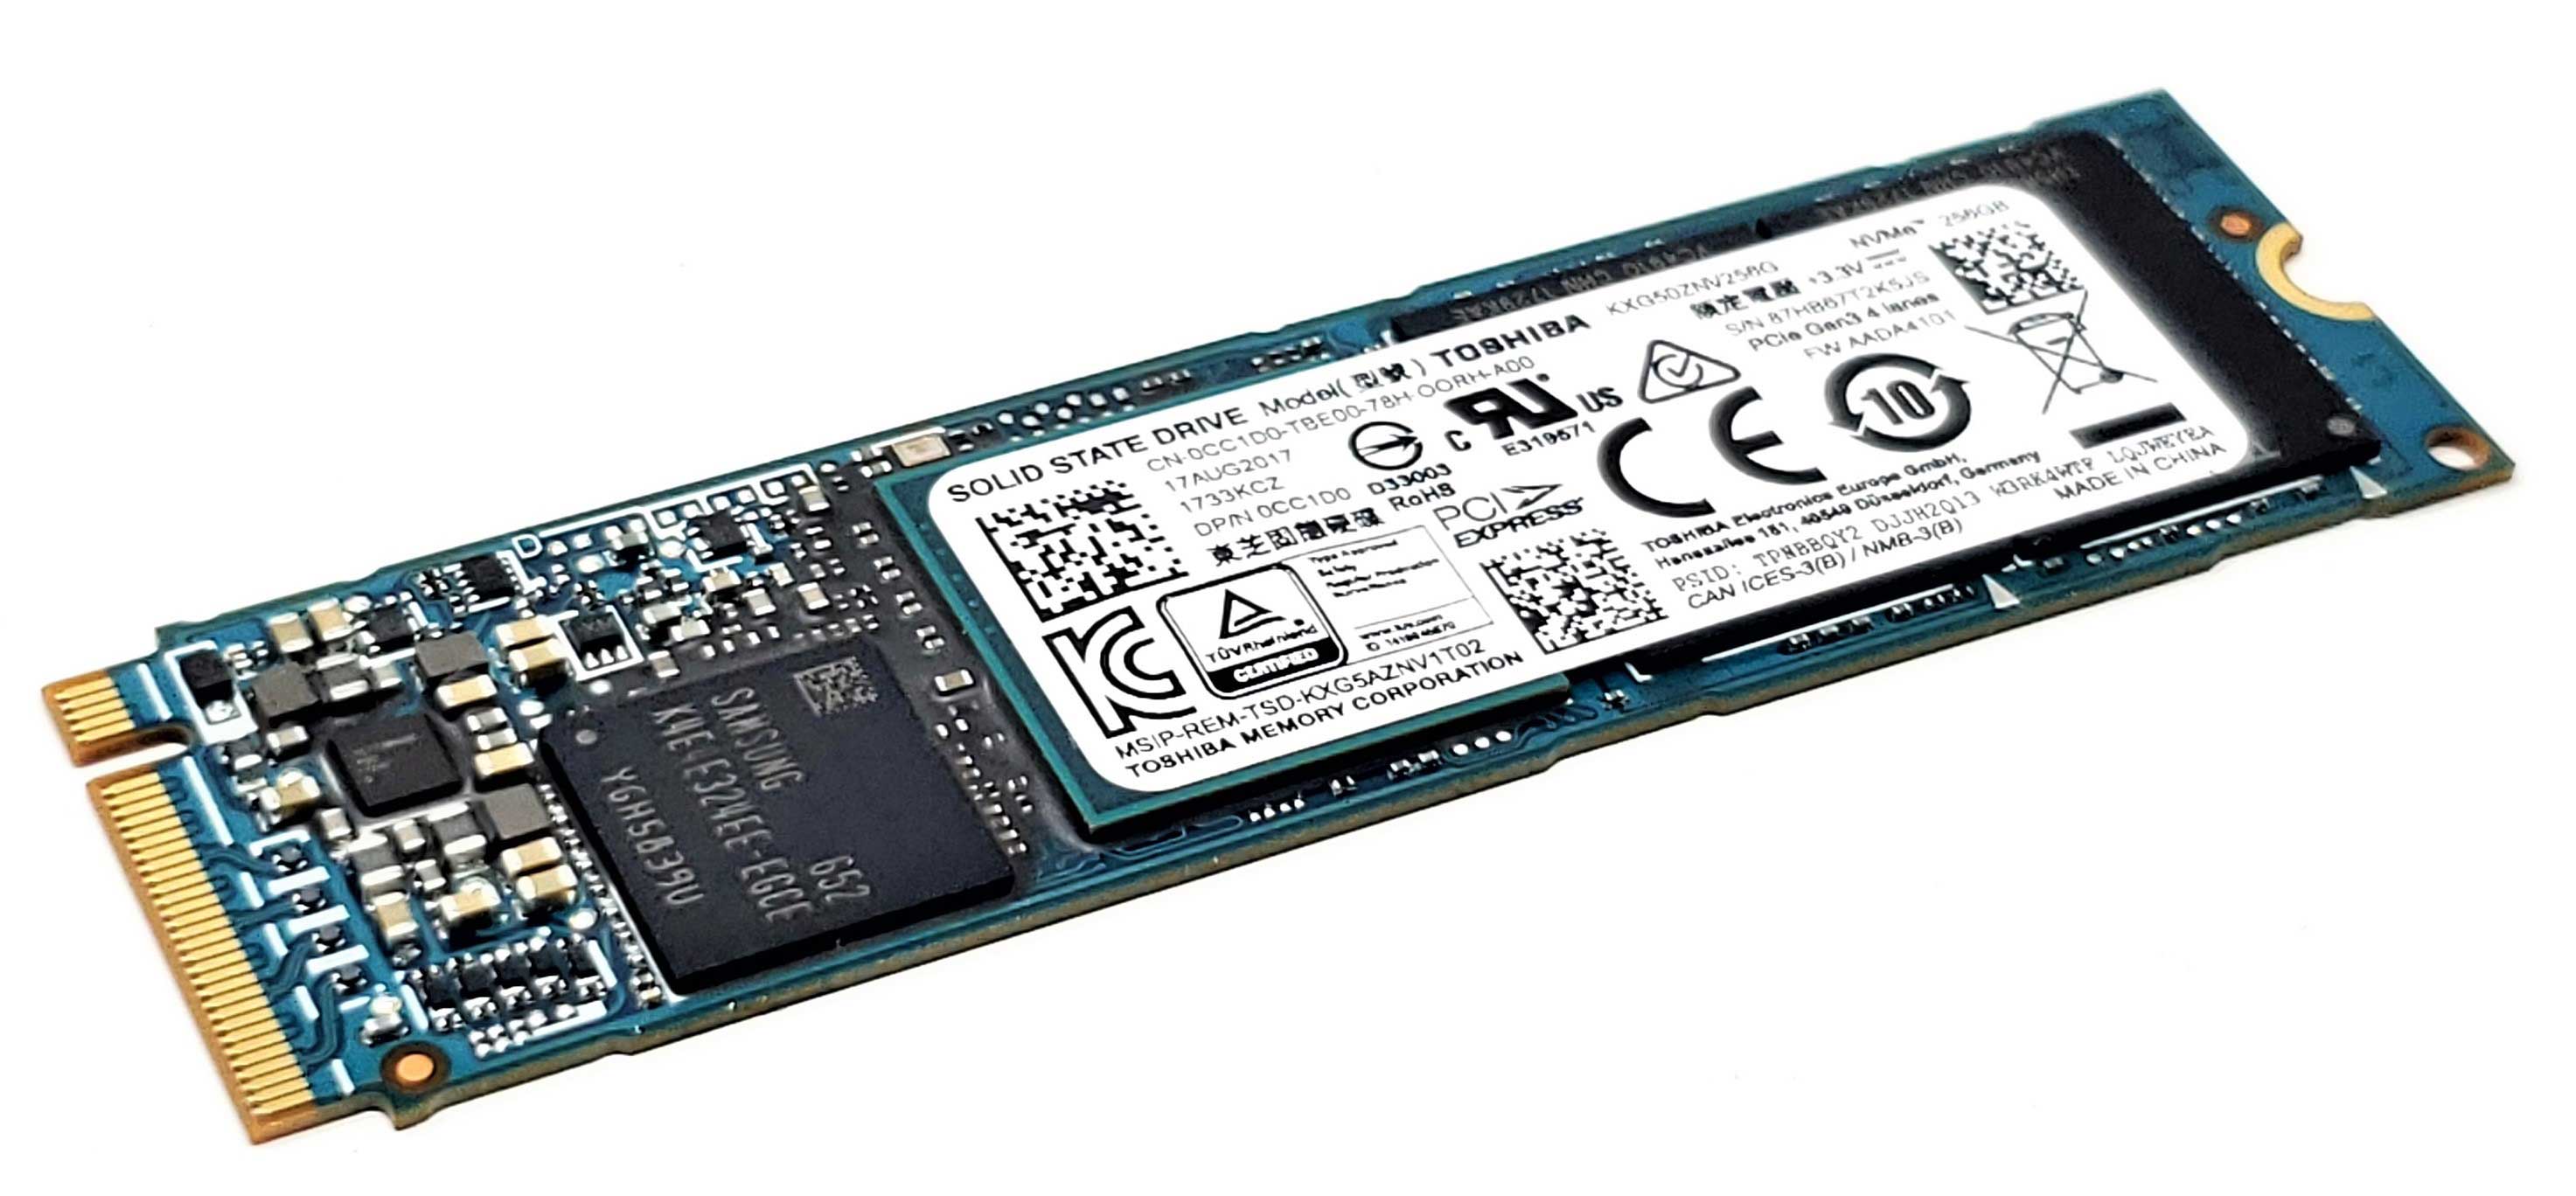 Intel SSDPEKKW256G7 - 256GB M.2 PCIe NVMe 2280 MLC 3D-Nand SSD Solid State